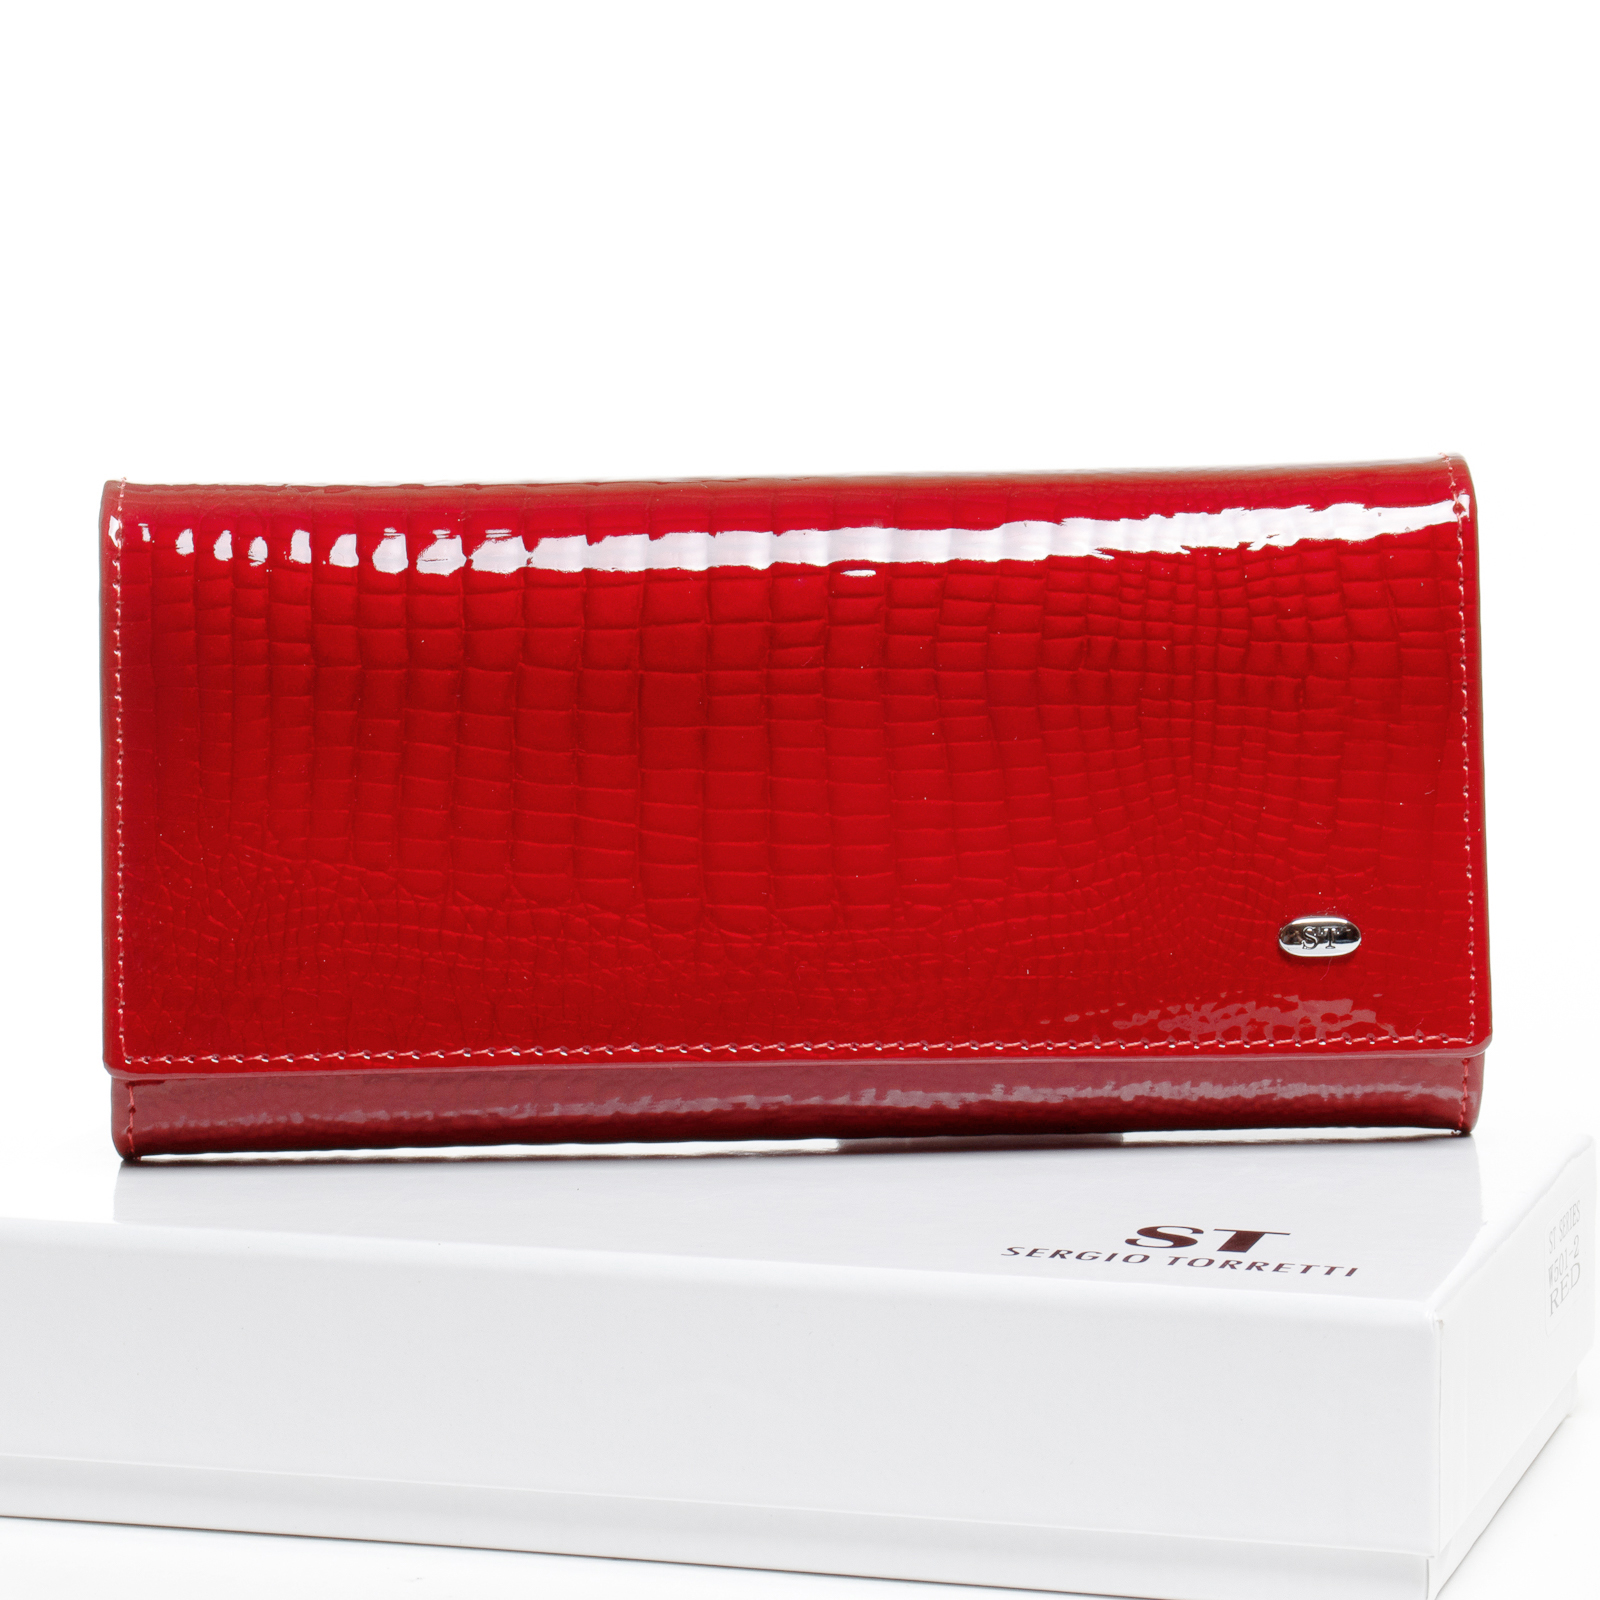 Красный женский кошелек лаковая кожа SERGIO TORRETTI W501-2 red